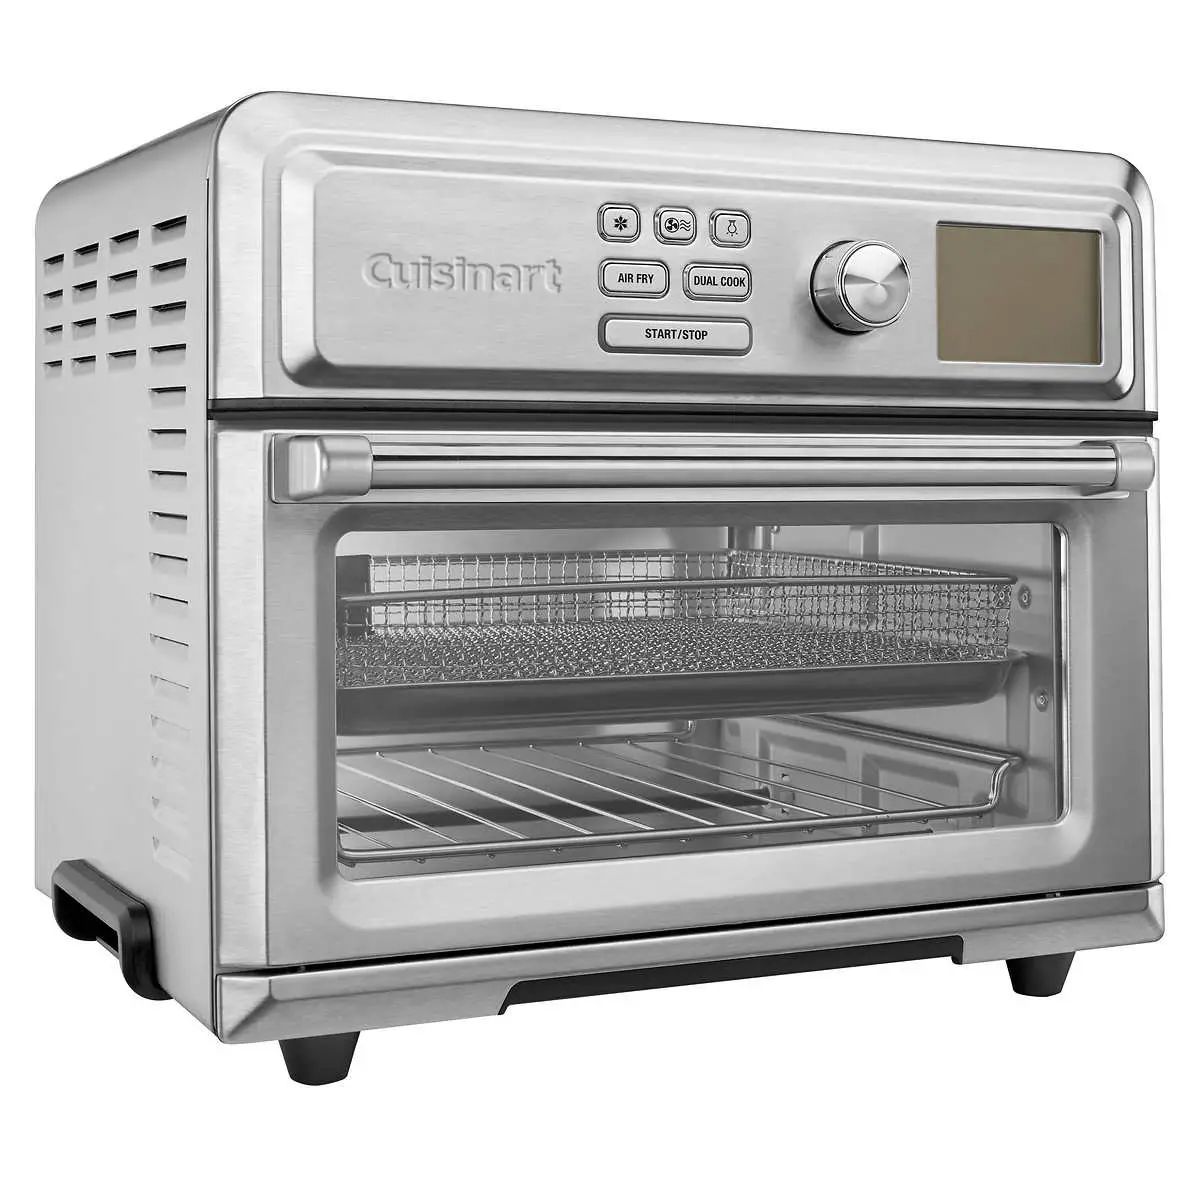 Costco Members: Cuisinart Digital AirFryer Toaster Oven